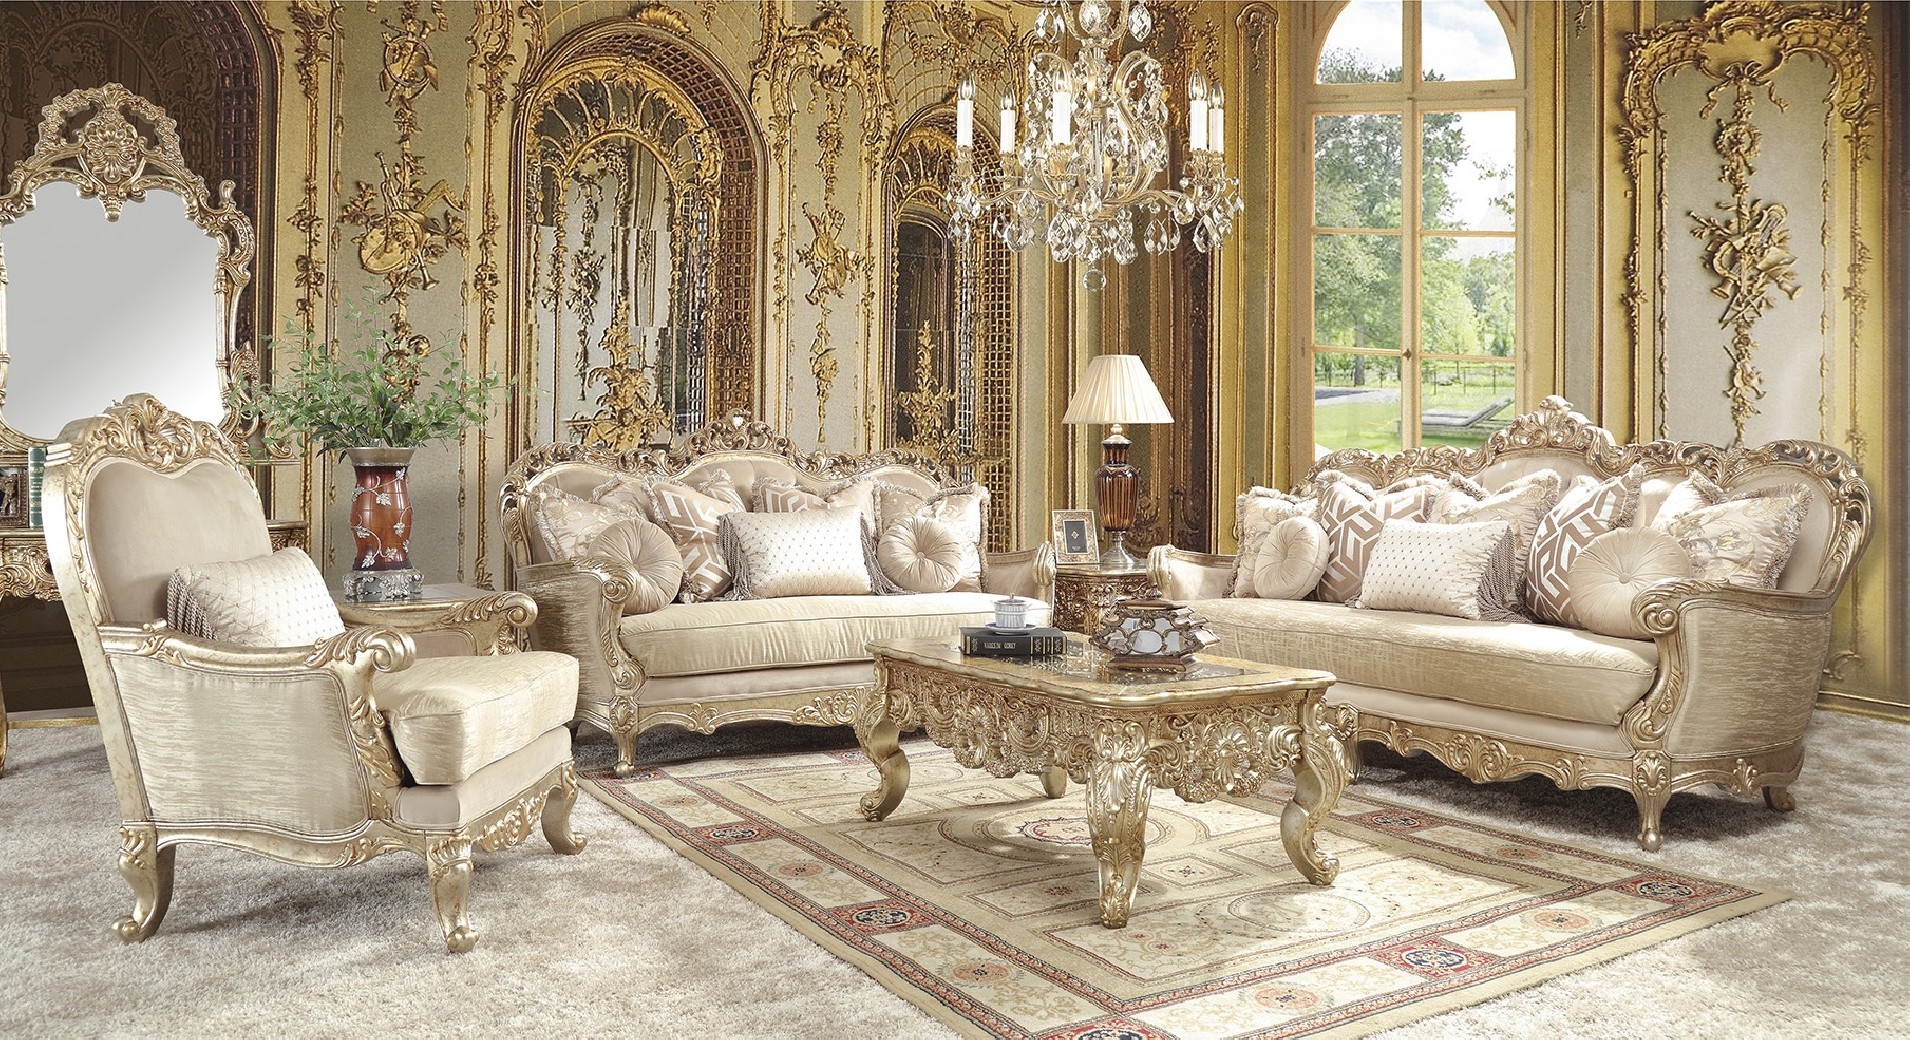 Enter French Antique Living Room Images